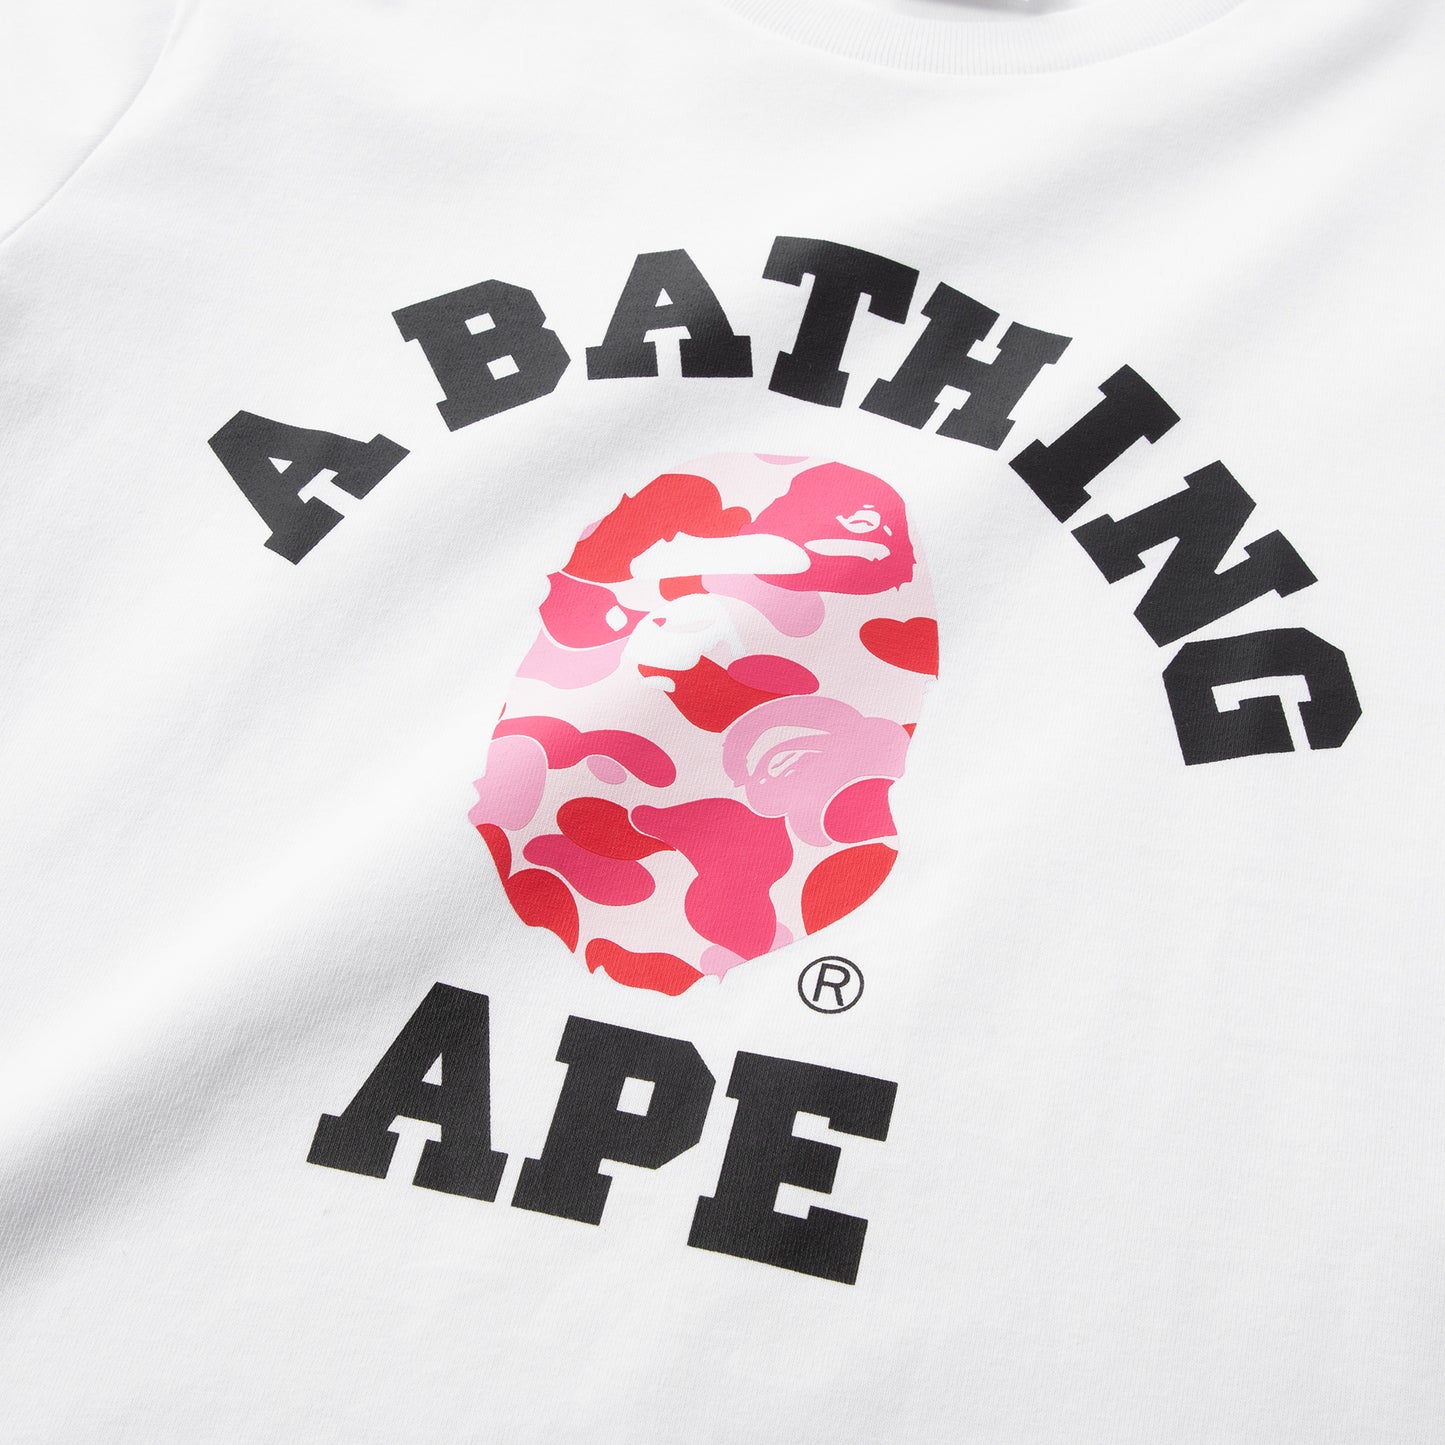 A Bathing Ape Womens ABC Camo College Tee (White/Pink)